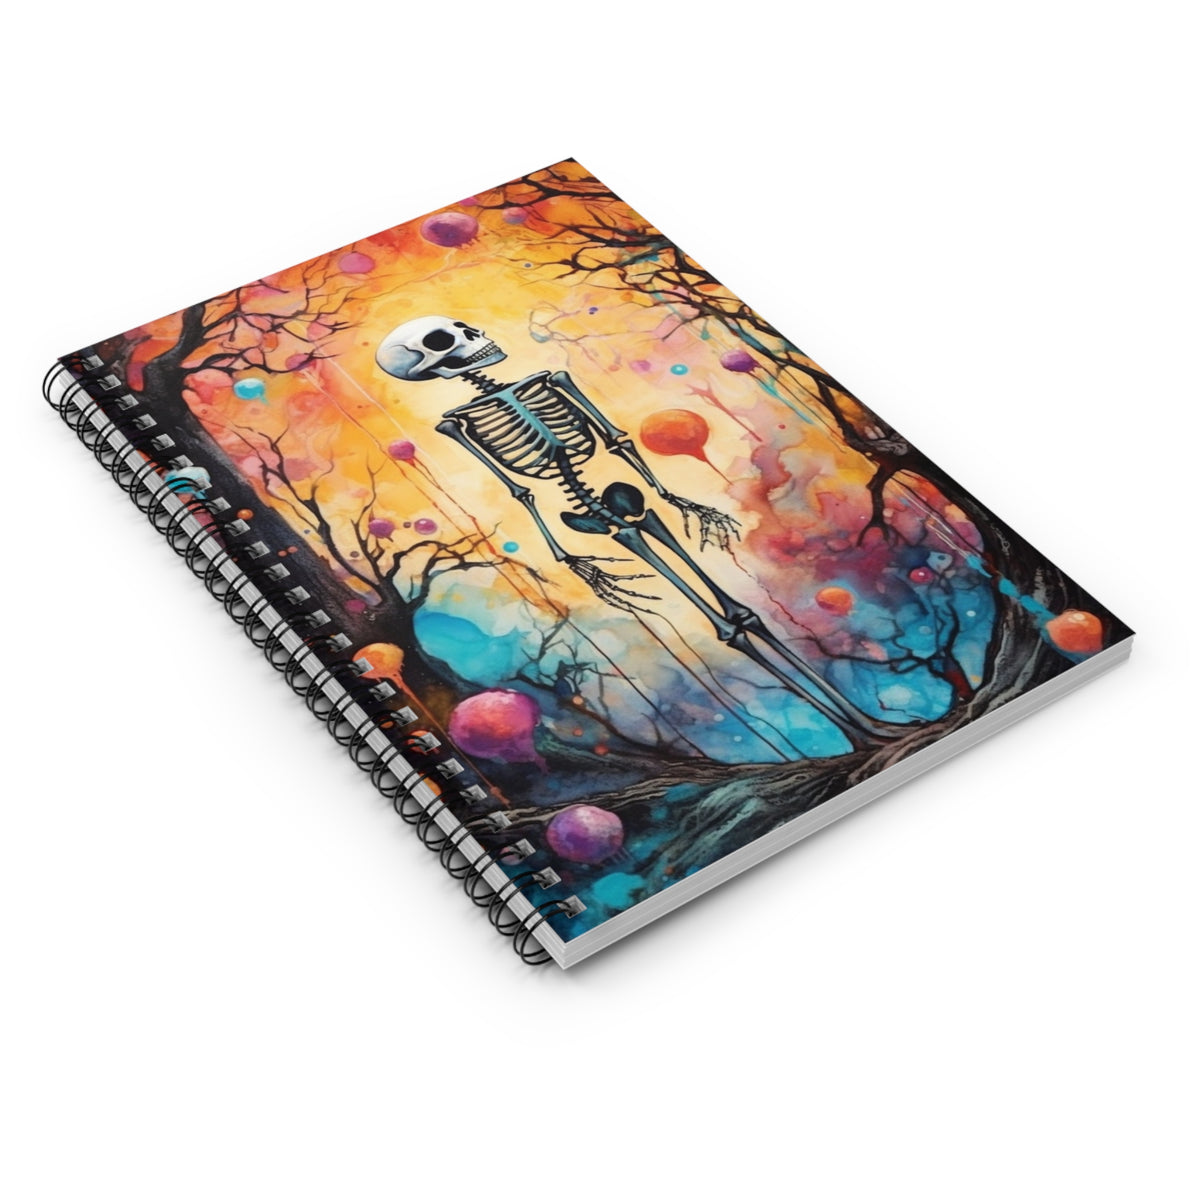 Halloween Skeleton Watercolor Art Journal Notebook | Skeleton Art Gift |  Ruled Line Spiral Notebook